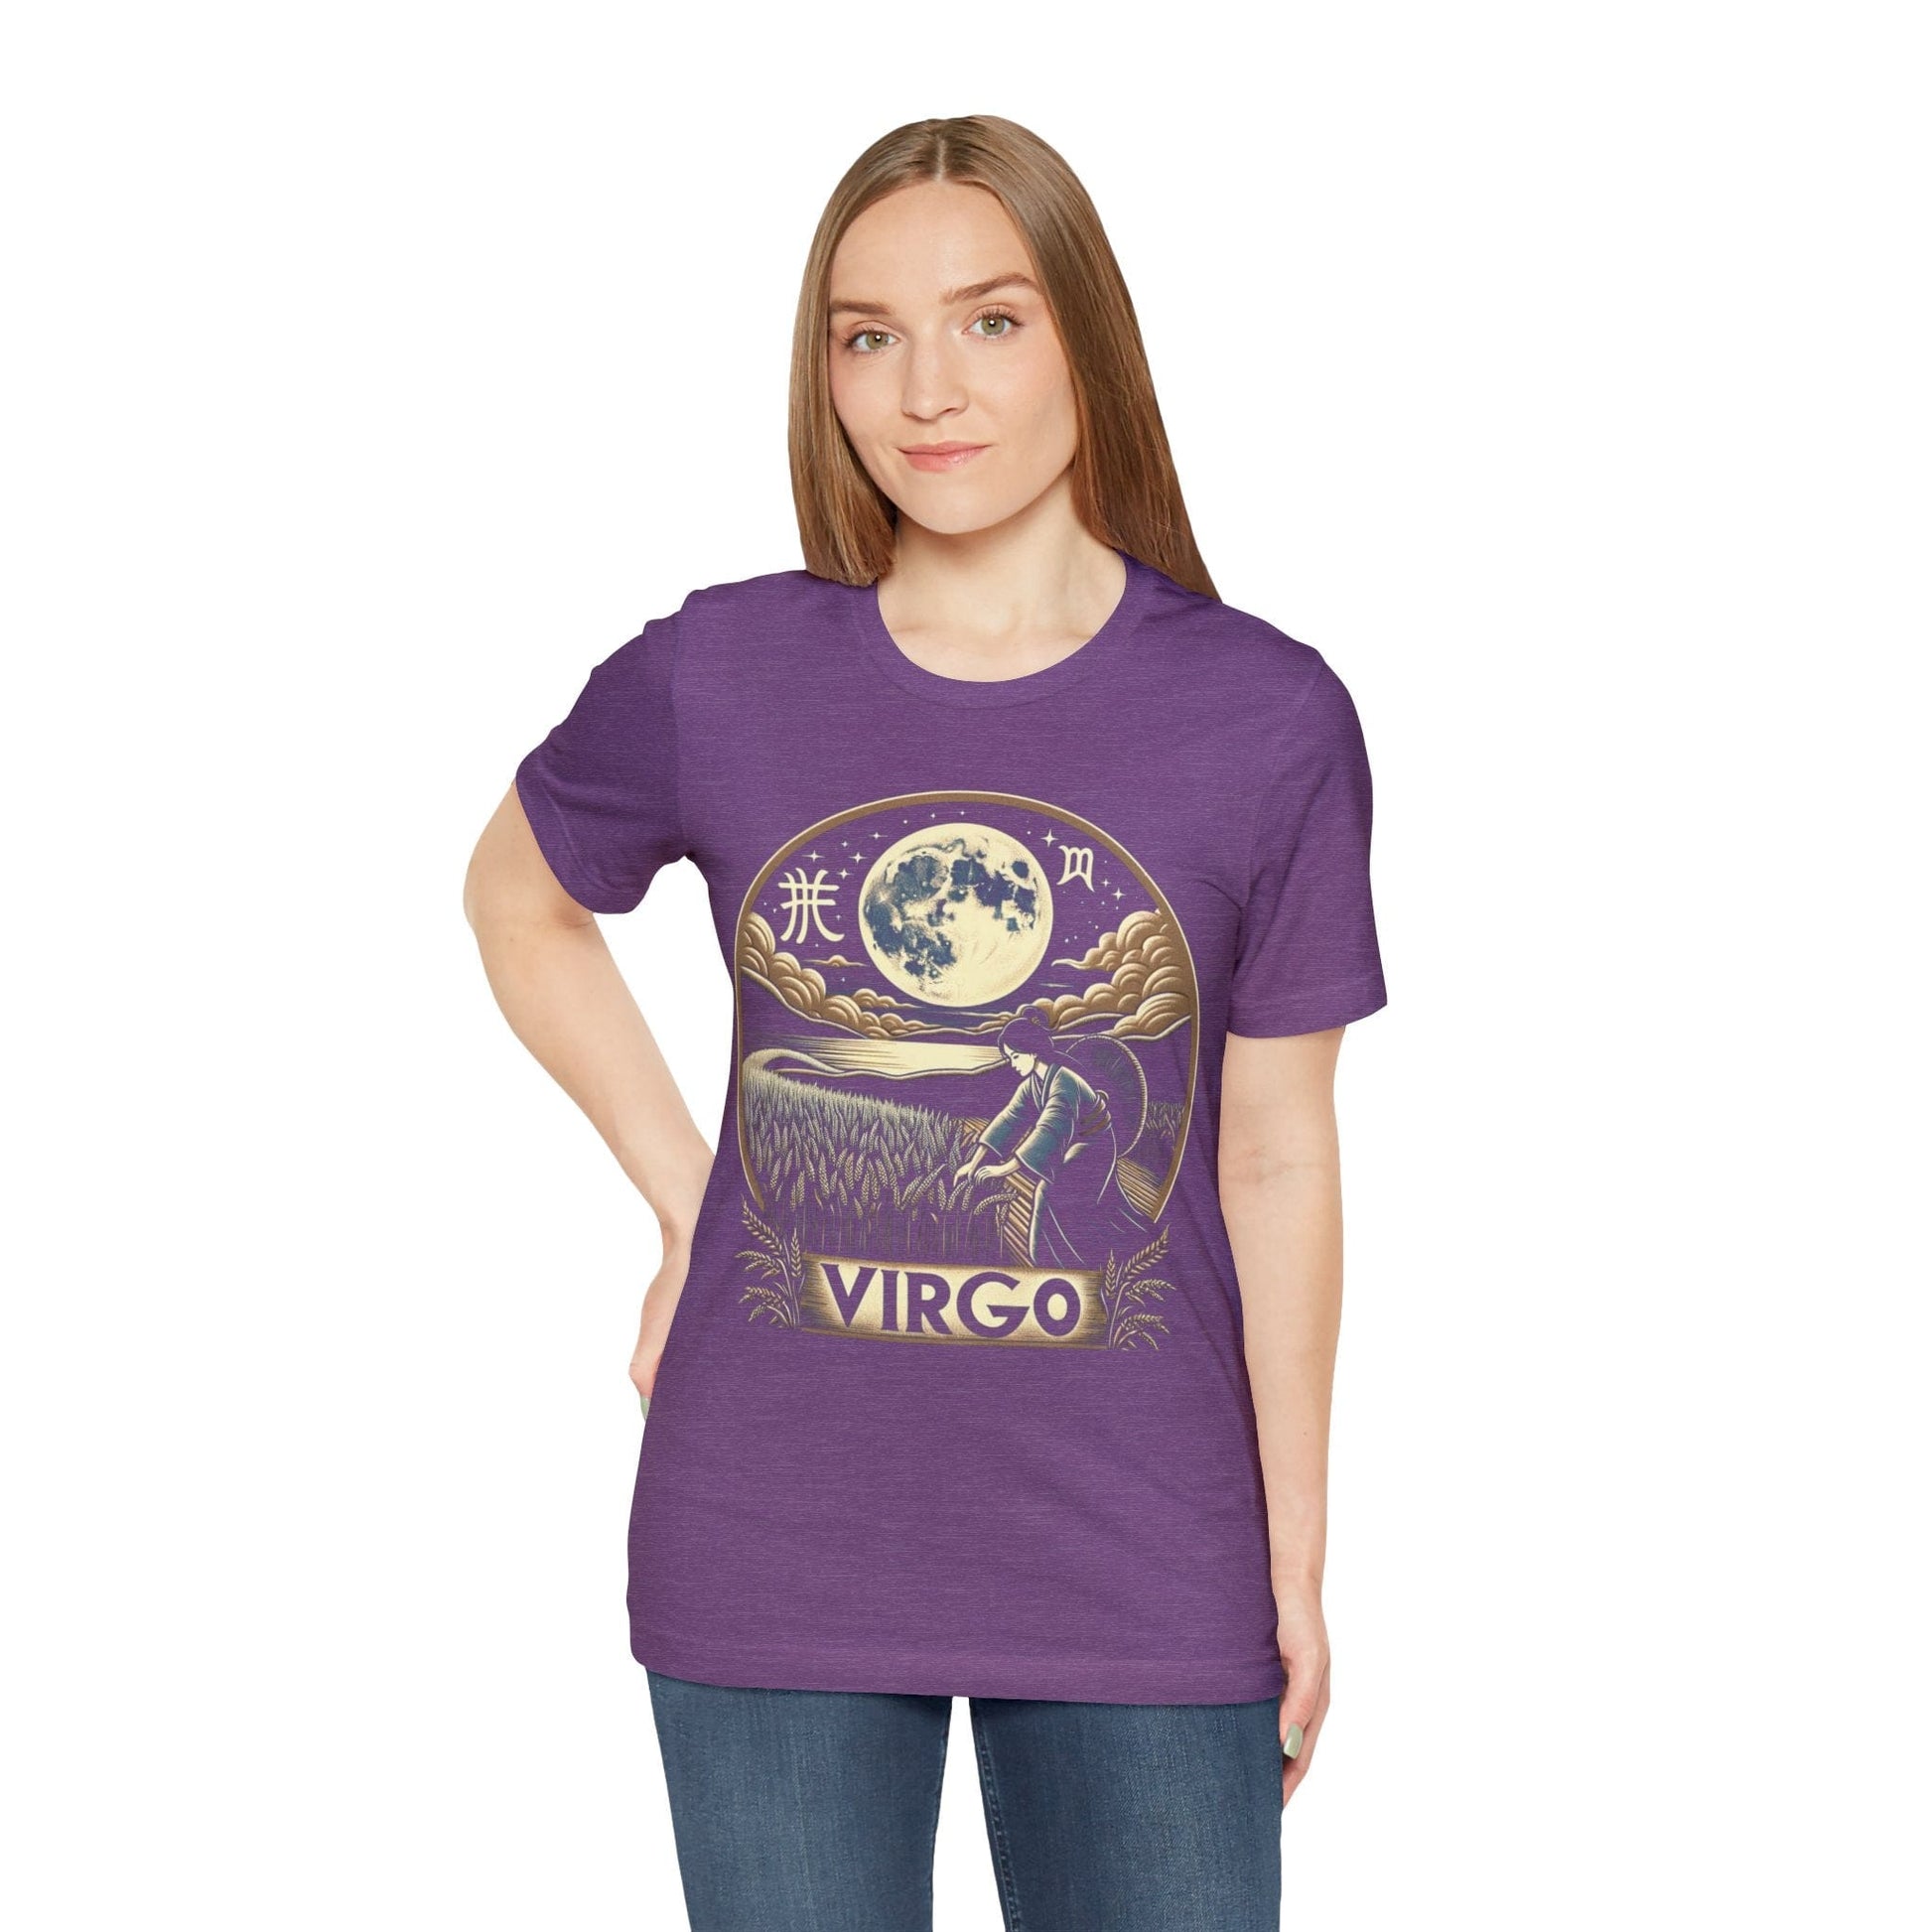 T-Shirt Harvest Moon Serenity: Virgo Ukiyo-e Inspired T-Shirt